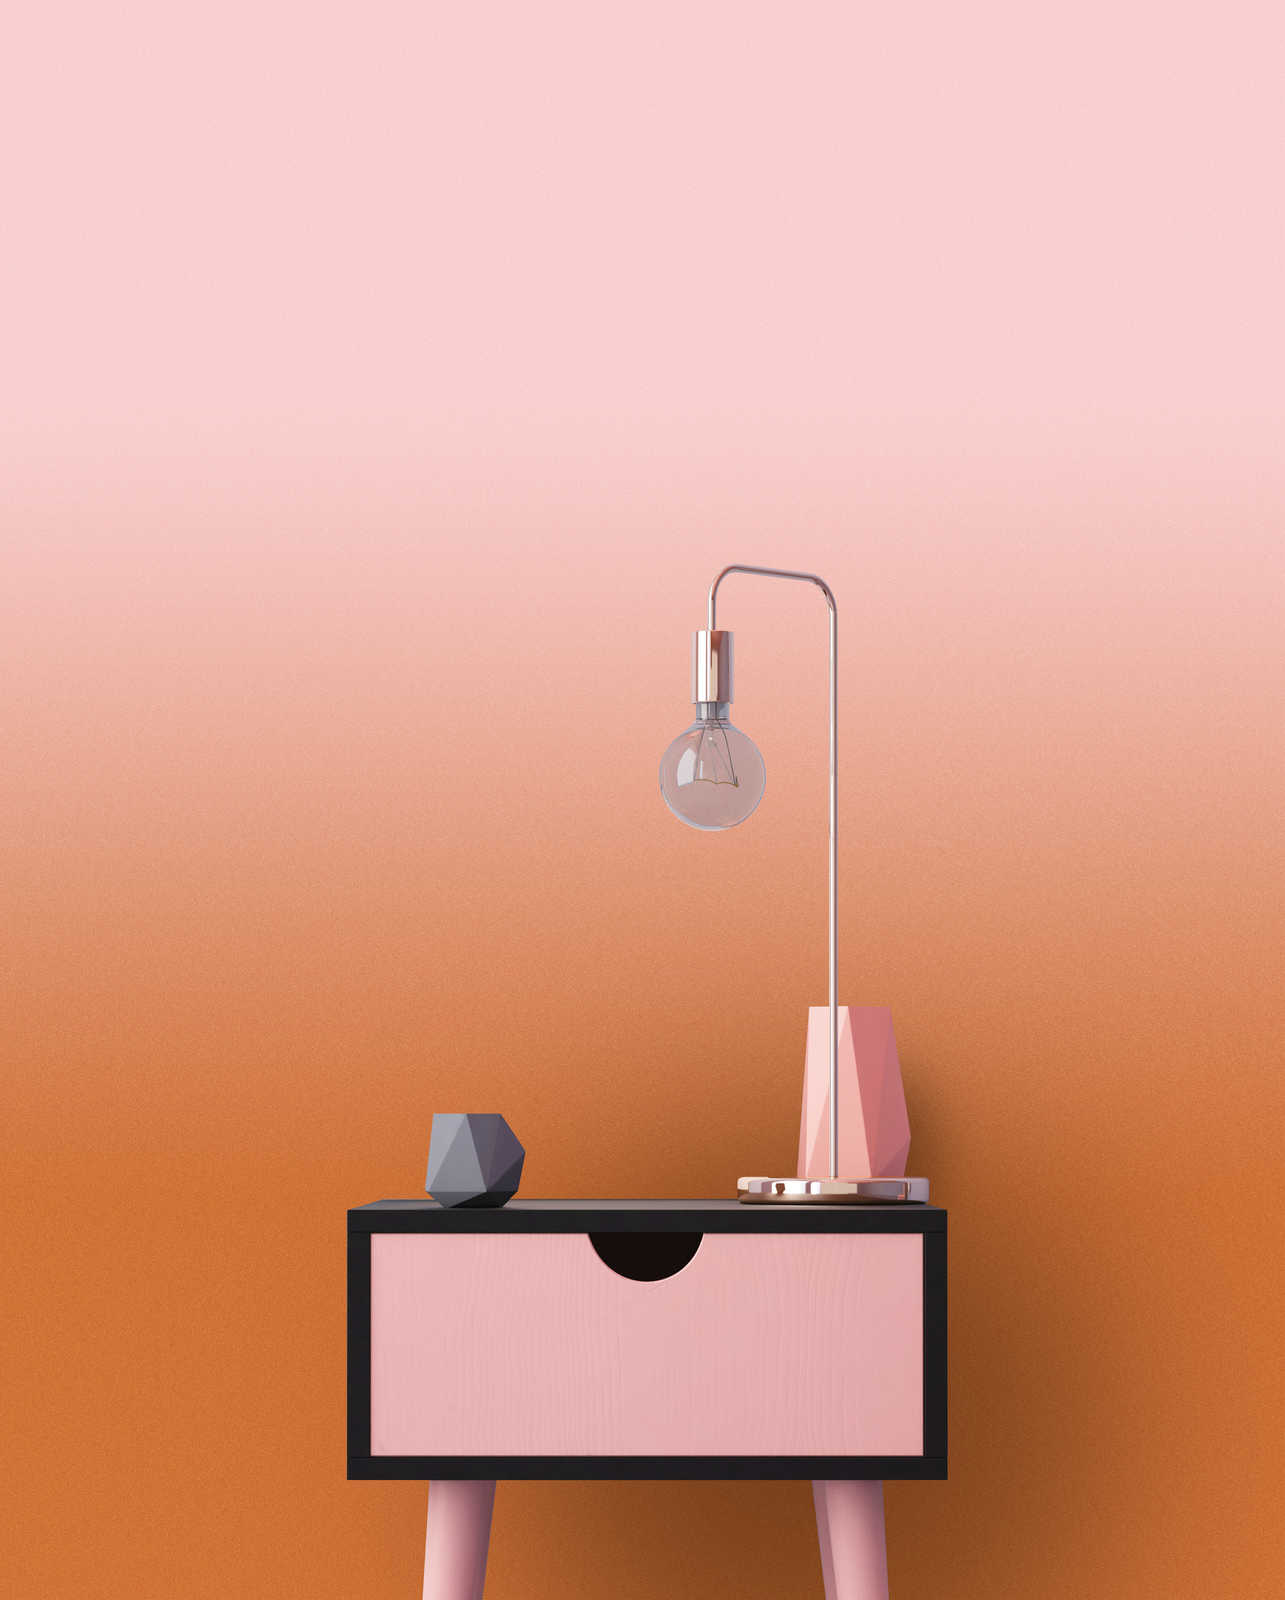             Colour Studio 4 - Ombre gradient pink & orange wallpaper
        